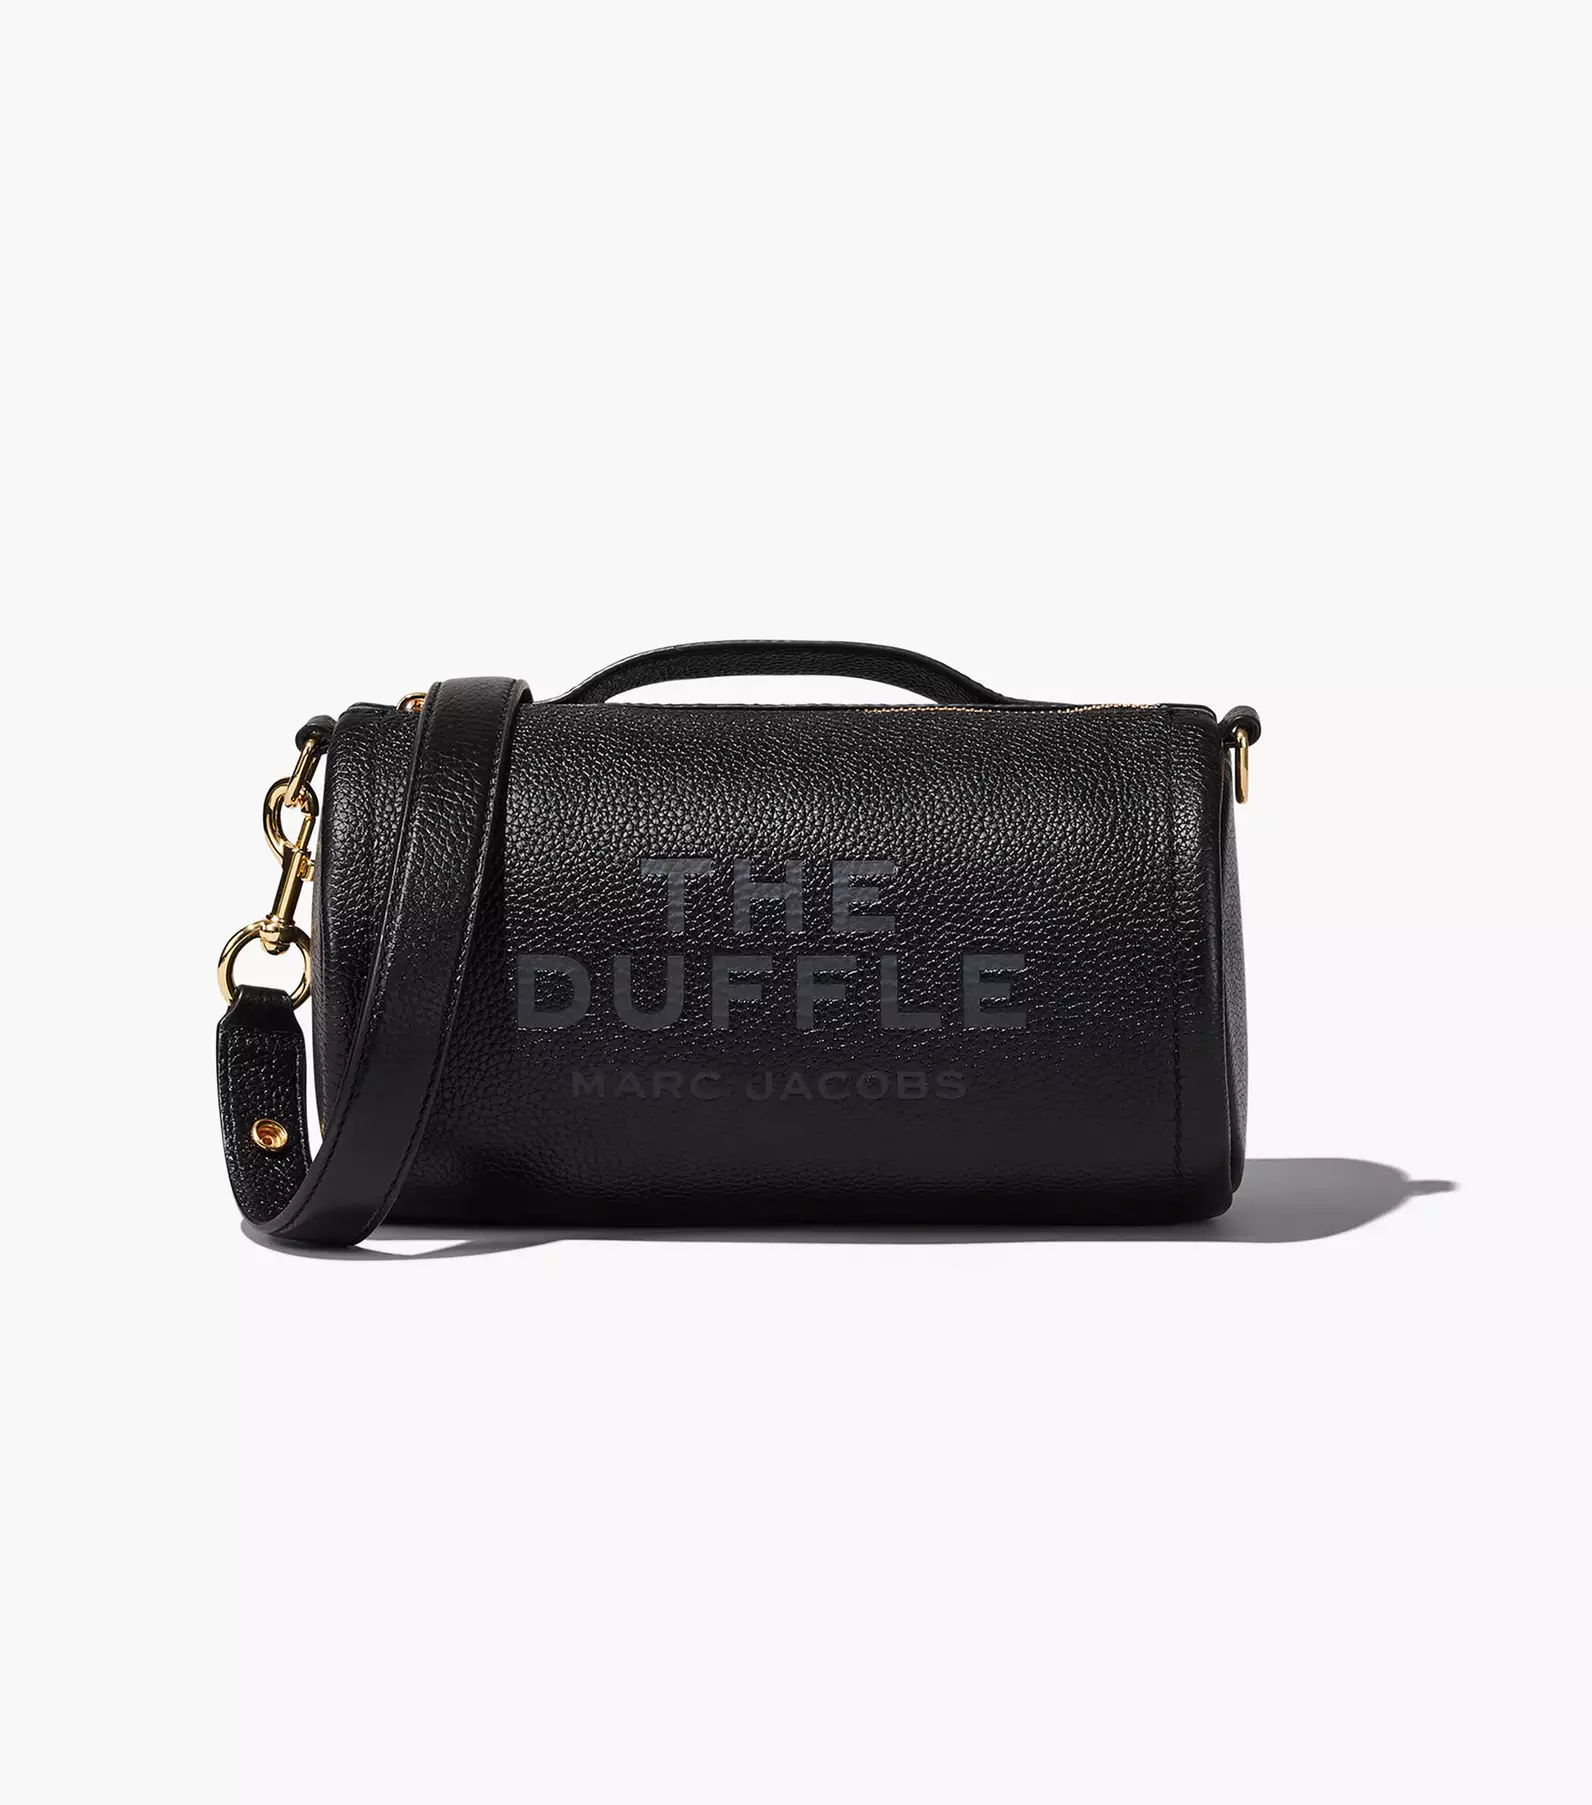 The Leather Duffle Bag | Marc Jacobs | Официальный сайт